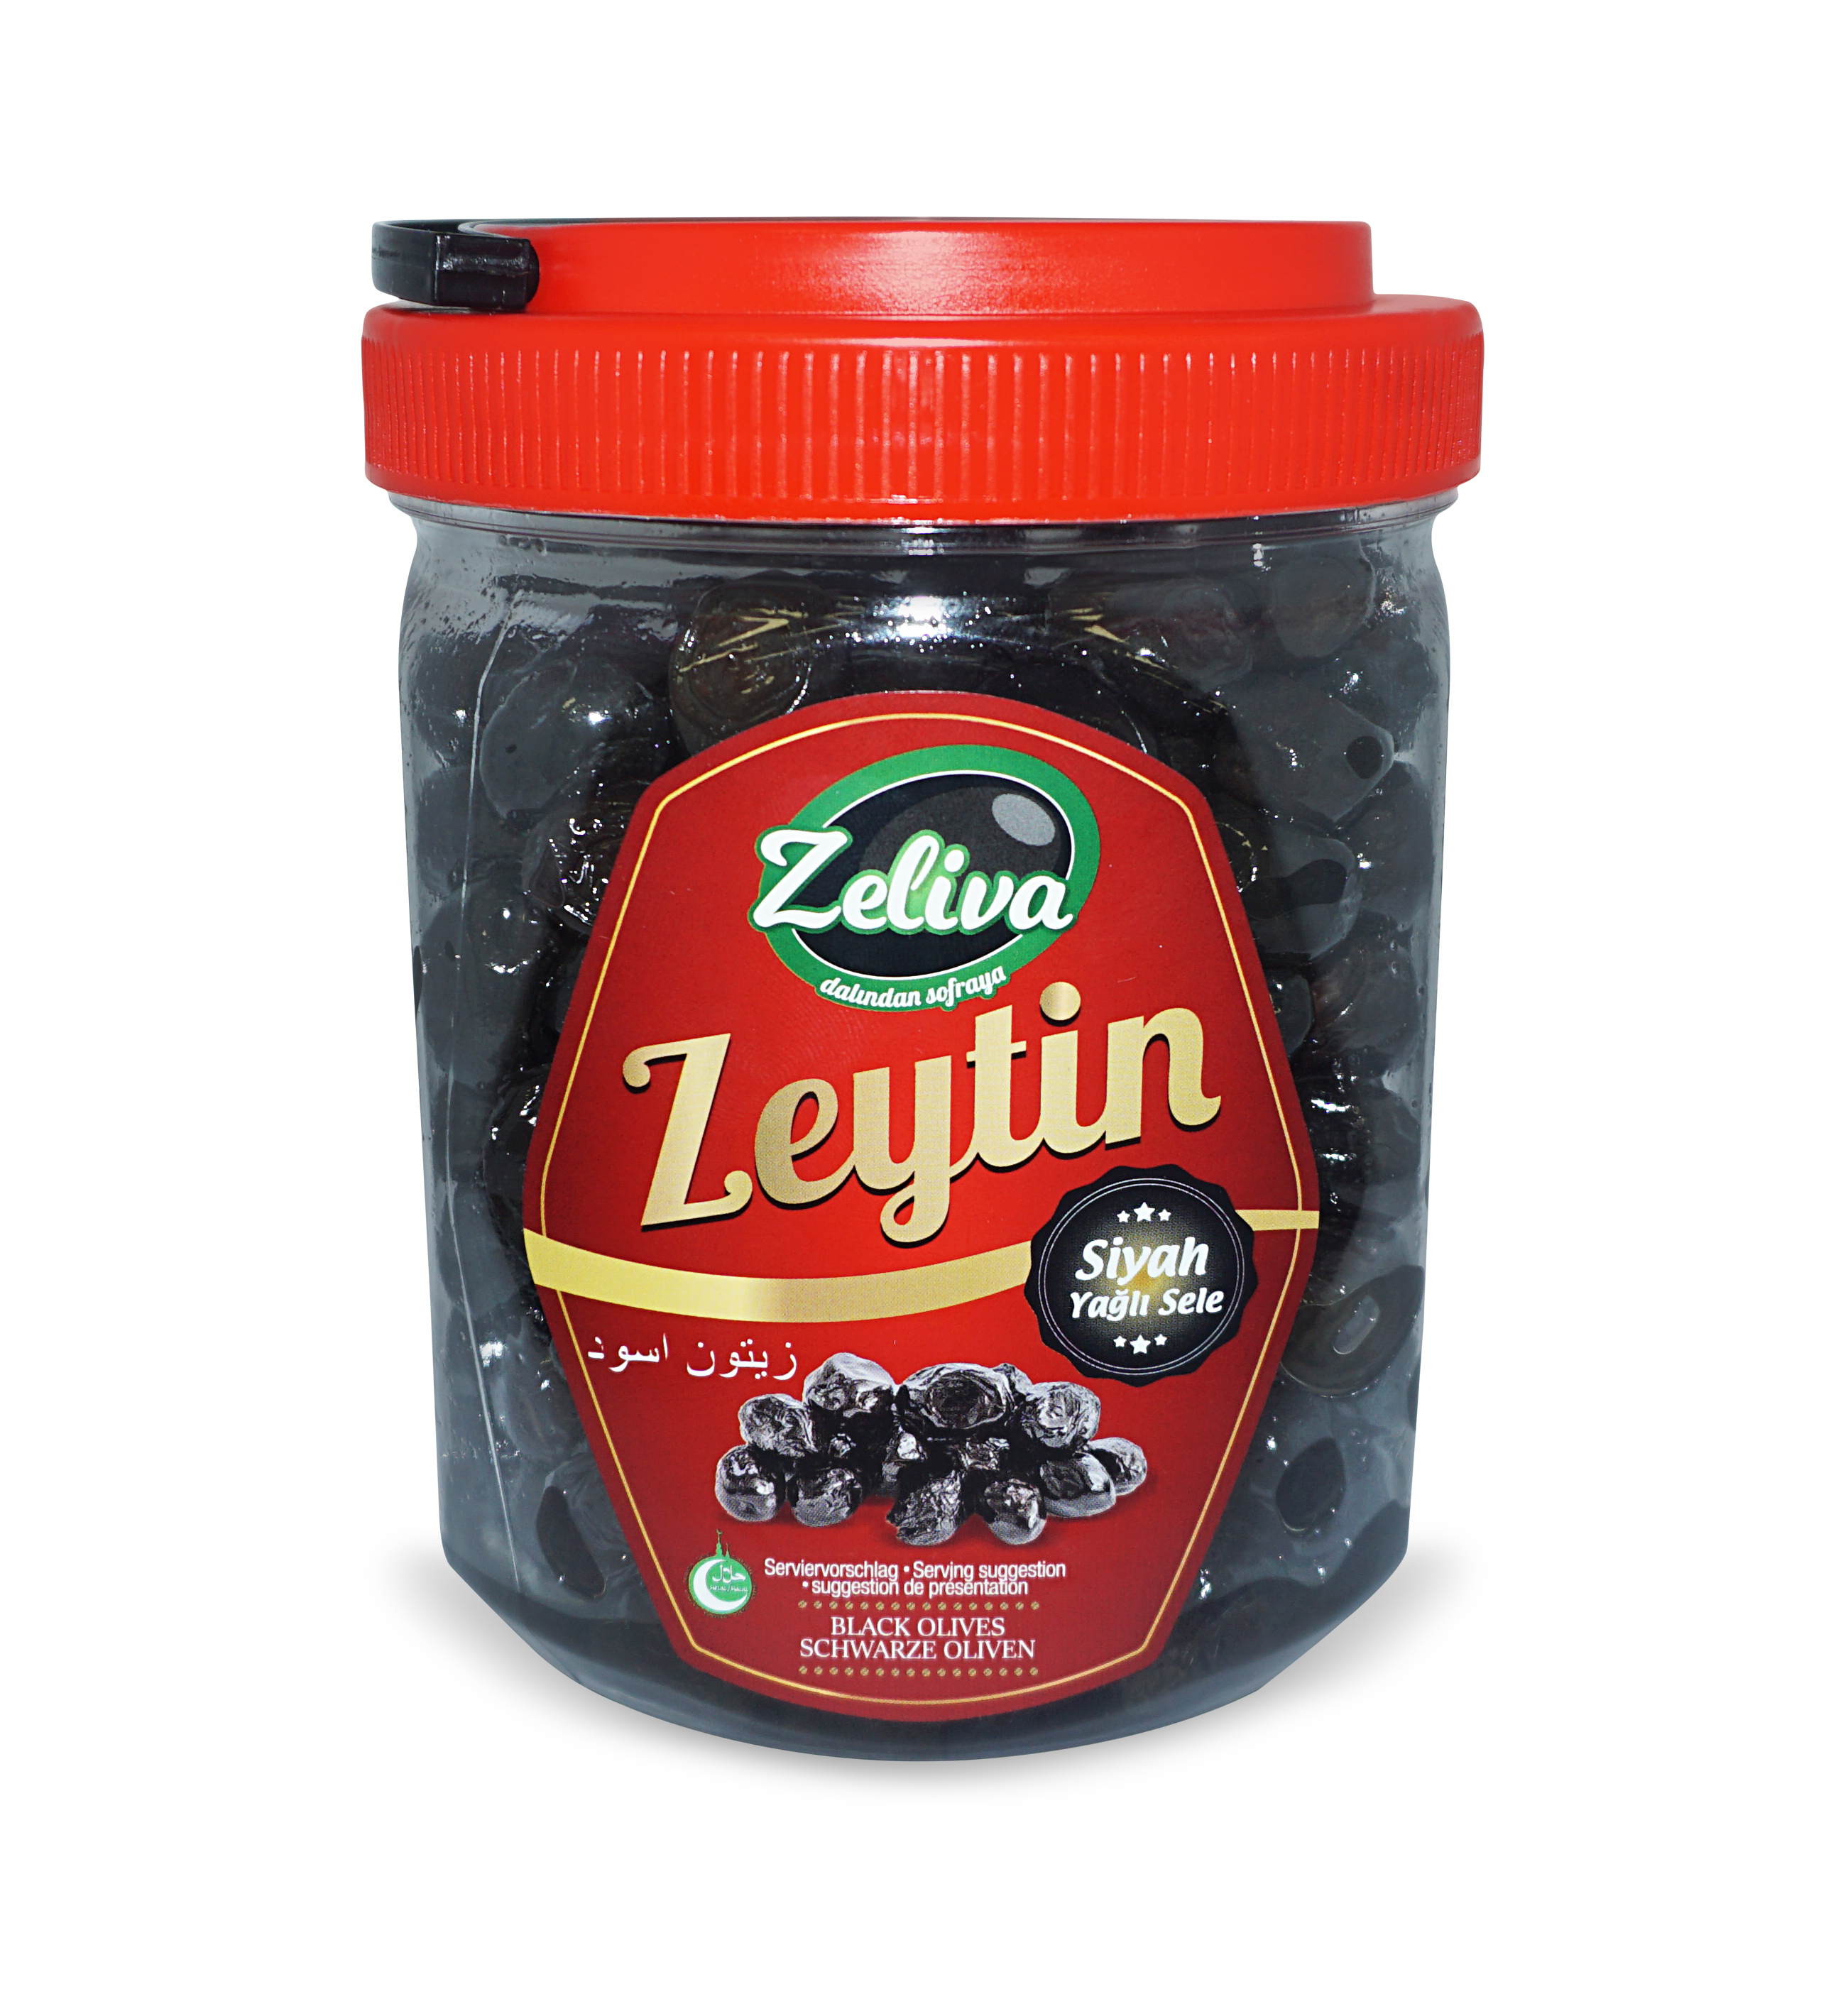 ZELIVA S.ZEYTIN GEMLIK SALAMURA YAGLI PET 700Gx6 (olives noires à l'huile)